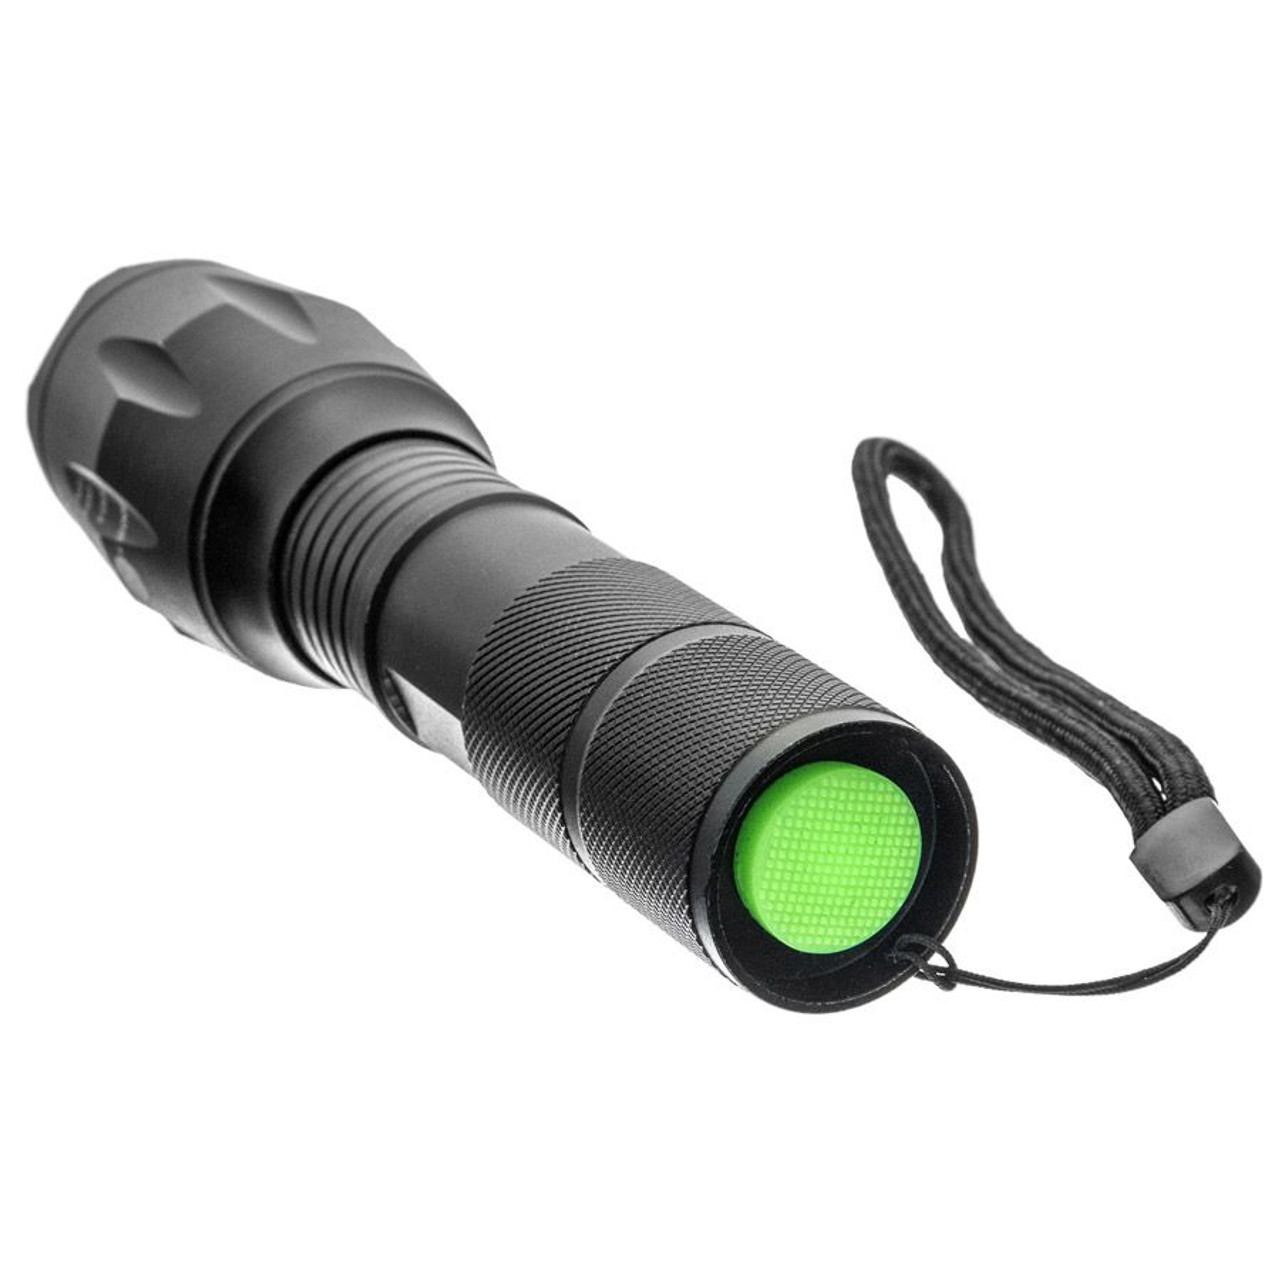 https://cdn11.bigcommerce.com/s-tumf4kk1l4/images/stencil/1280x1280/products/3182/5849/500-lumen-led-emergency-flashlight-adjustable-zoom-with-sos-and-strobe-26__01387.1640715097.jpg?c=1?imbypass=on